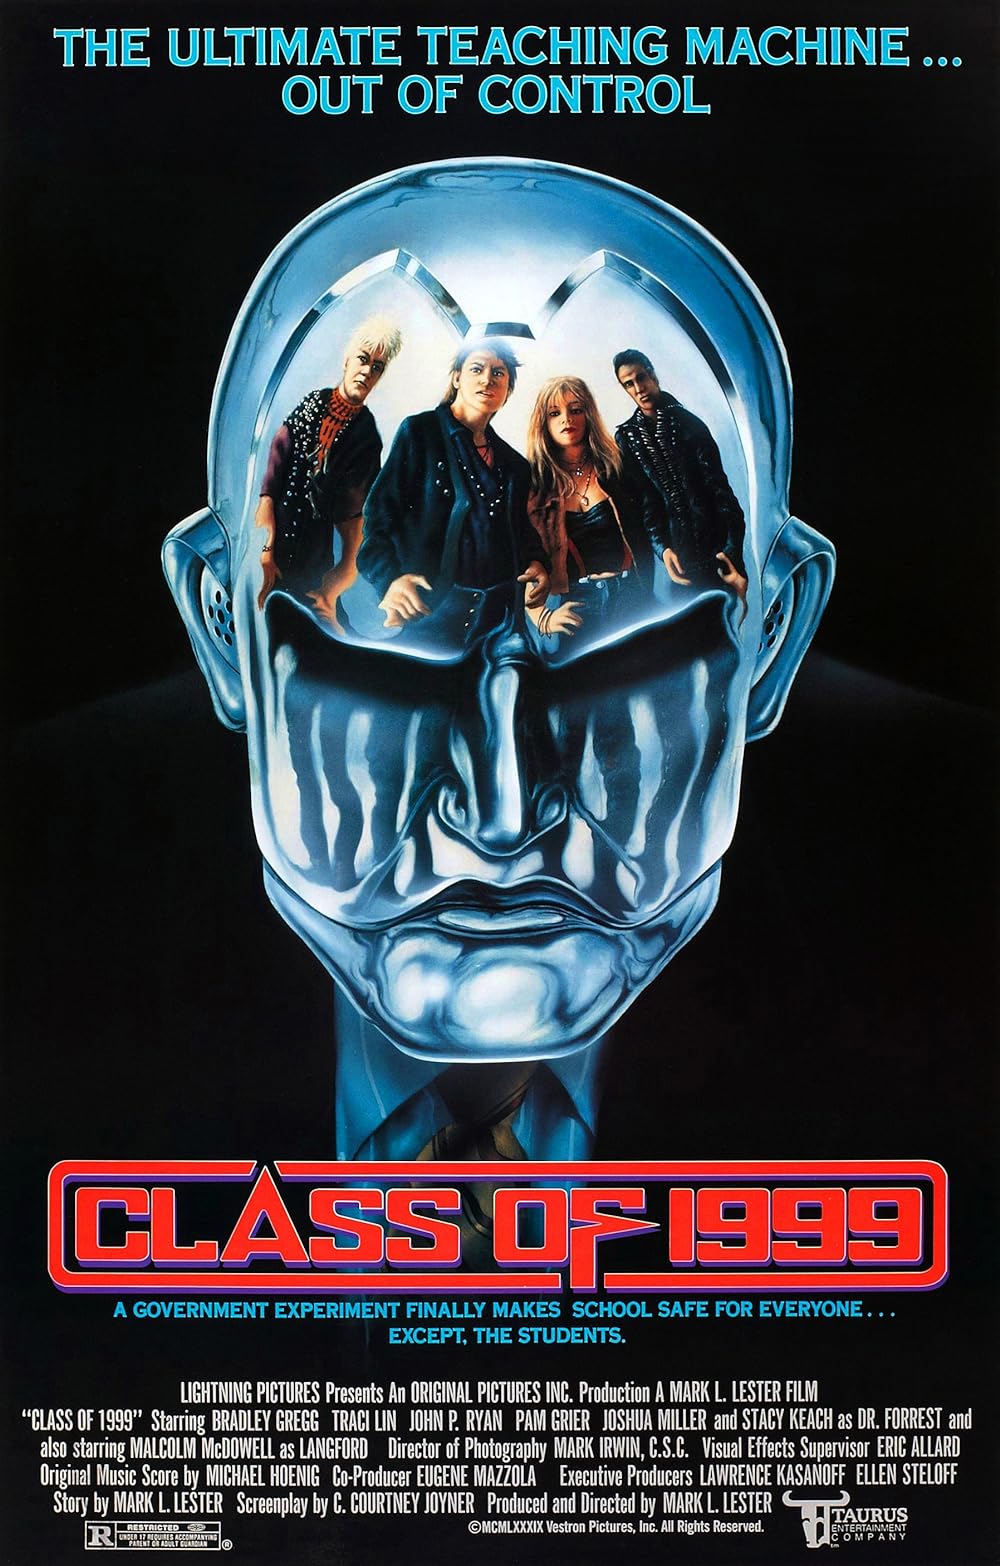 Class of 1999